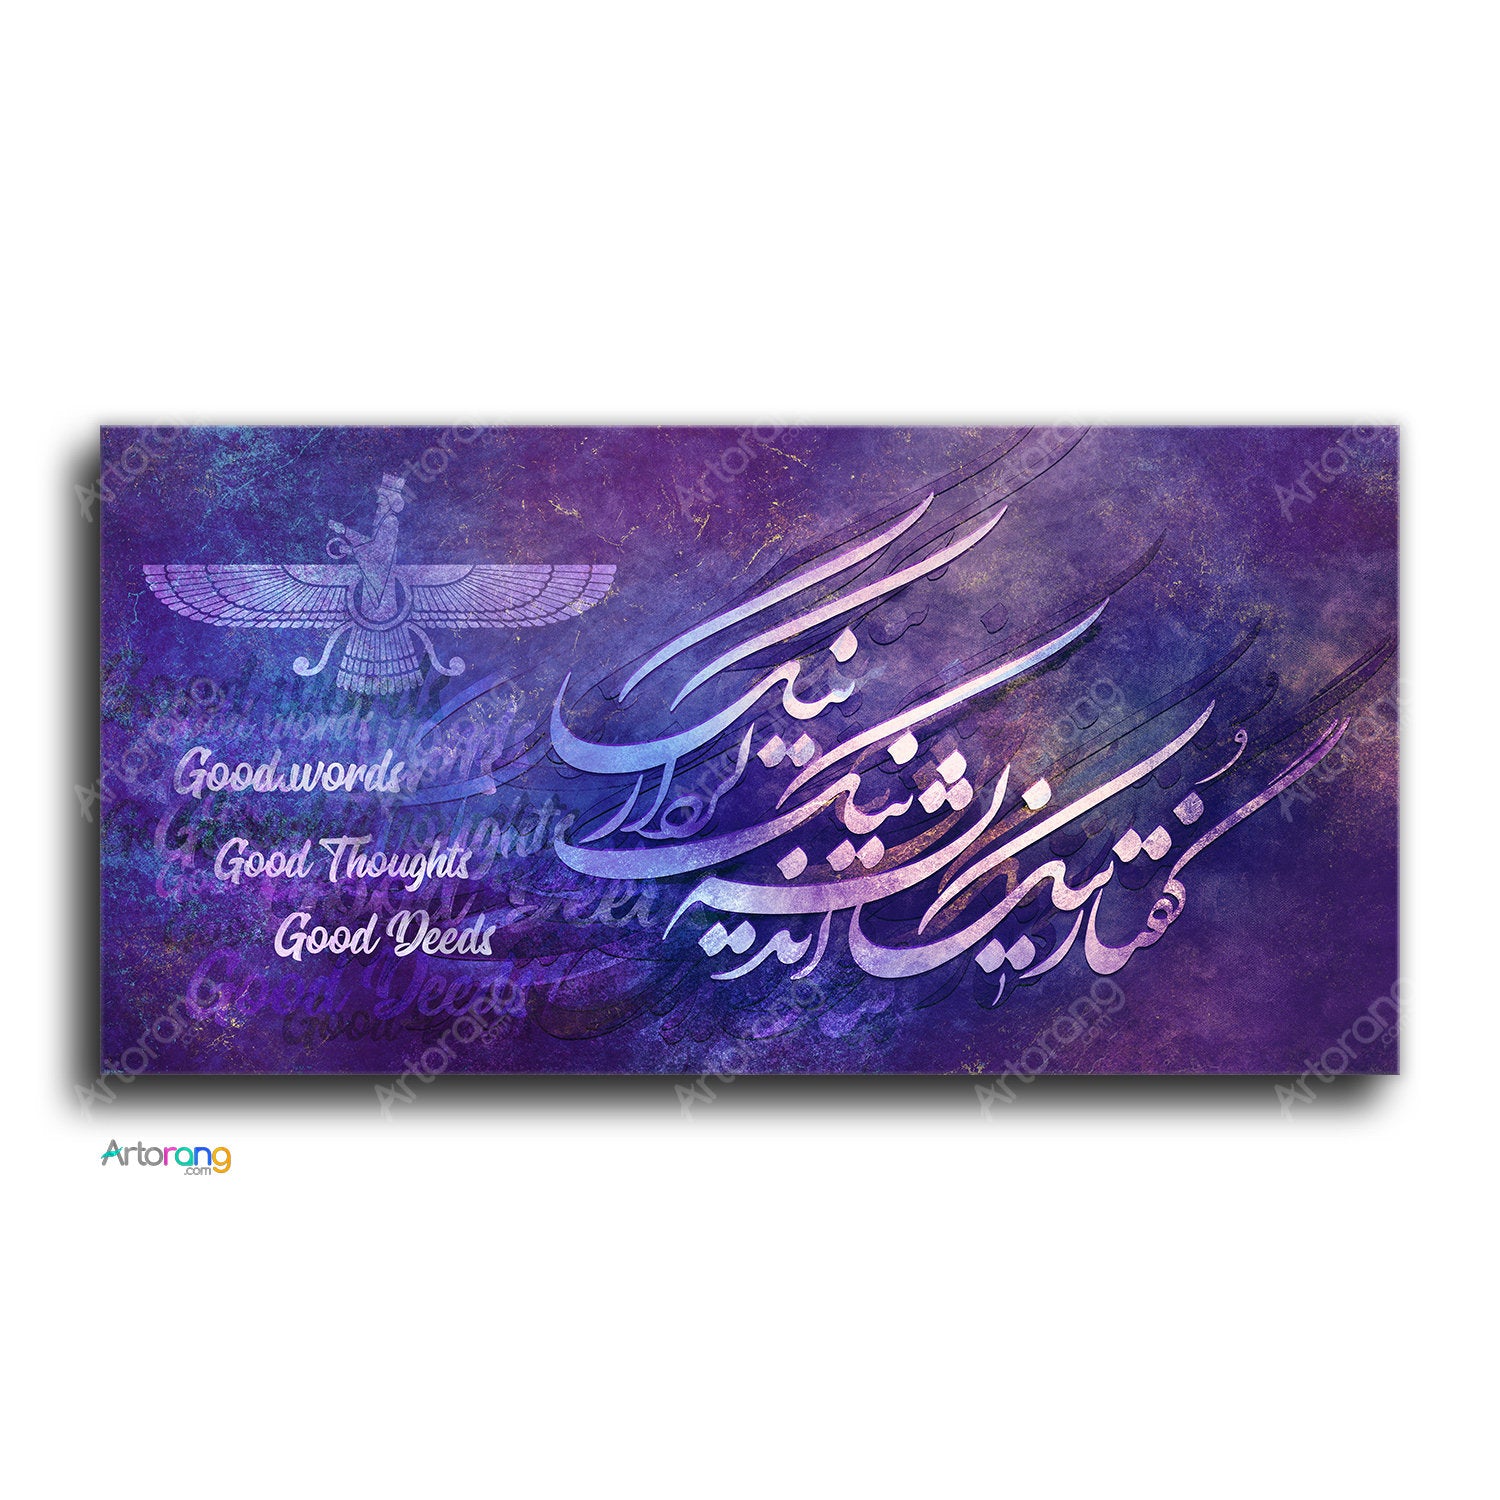 Good thoughts, words and deeds Zoroaster quote with Persian calligraphy wall art V1 | Persian Wall Art Canvas Art | Iranian Art | Persian gift - Artorang